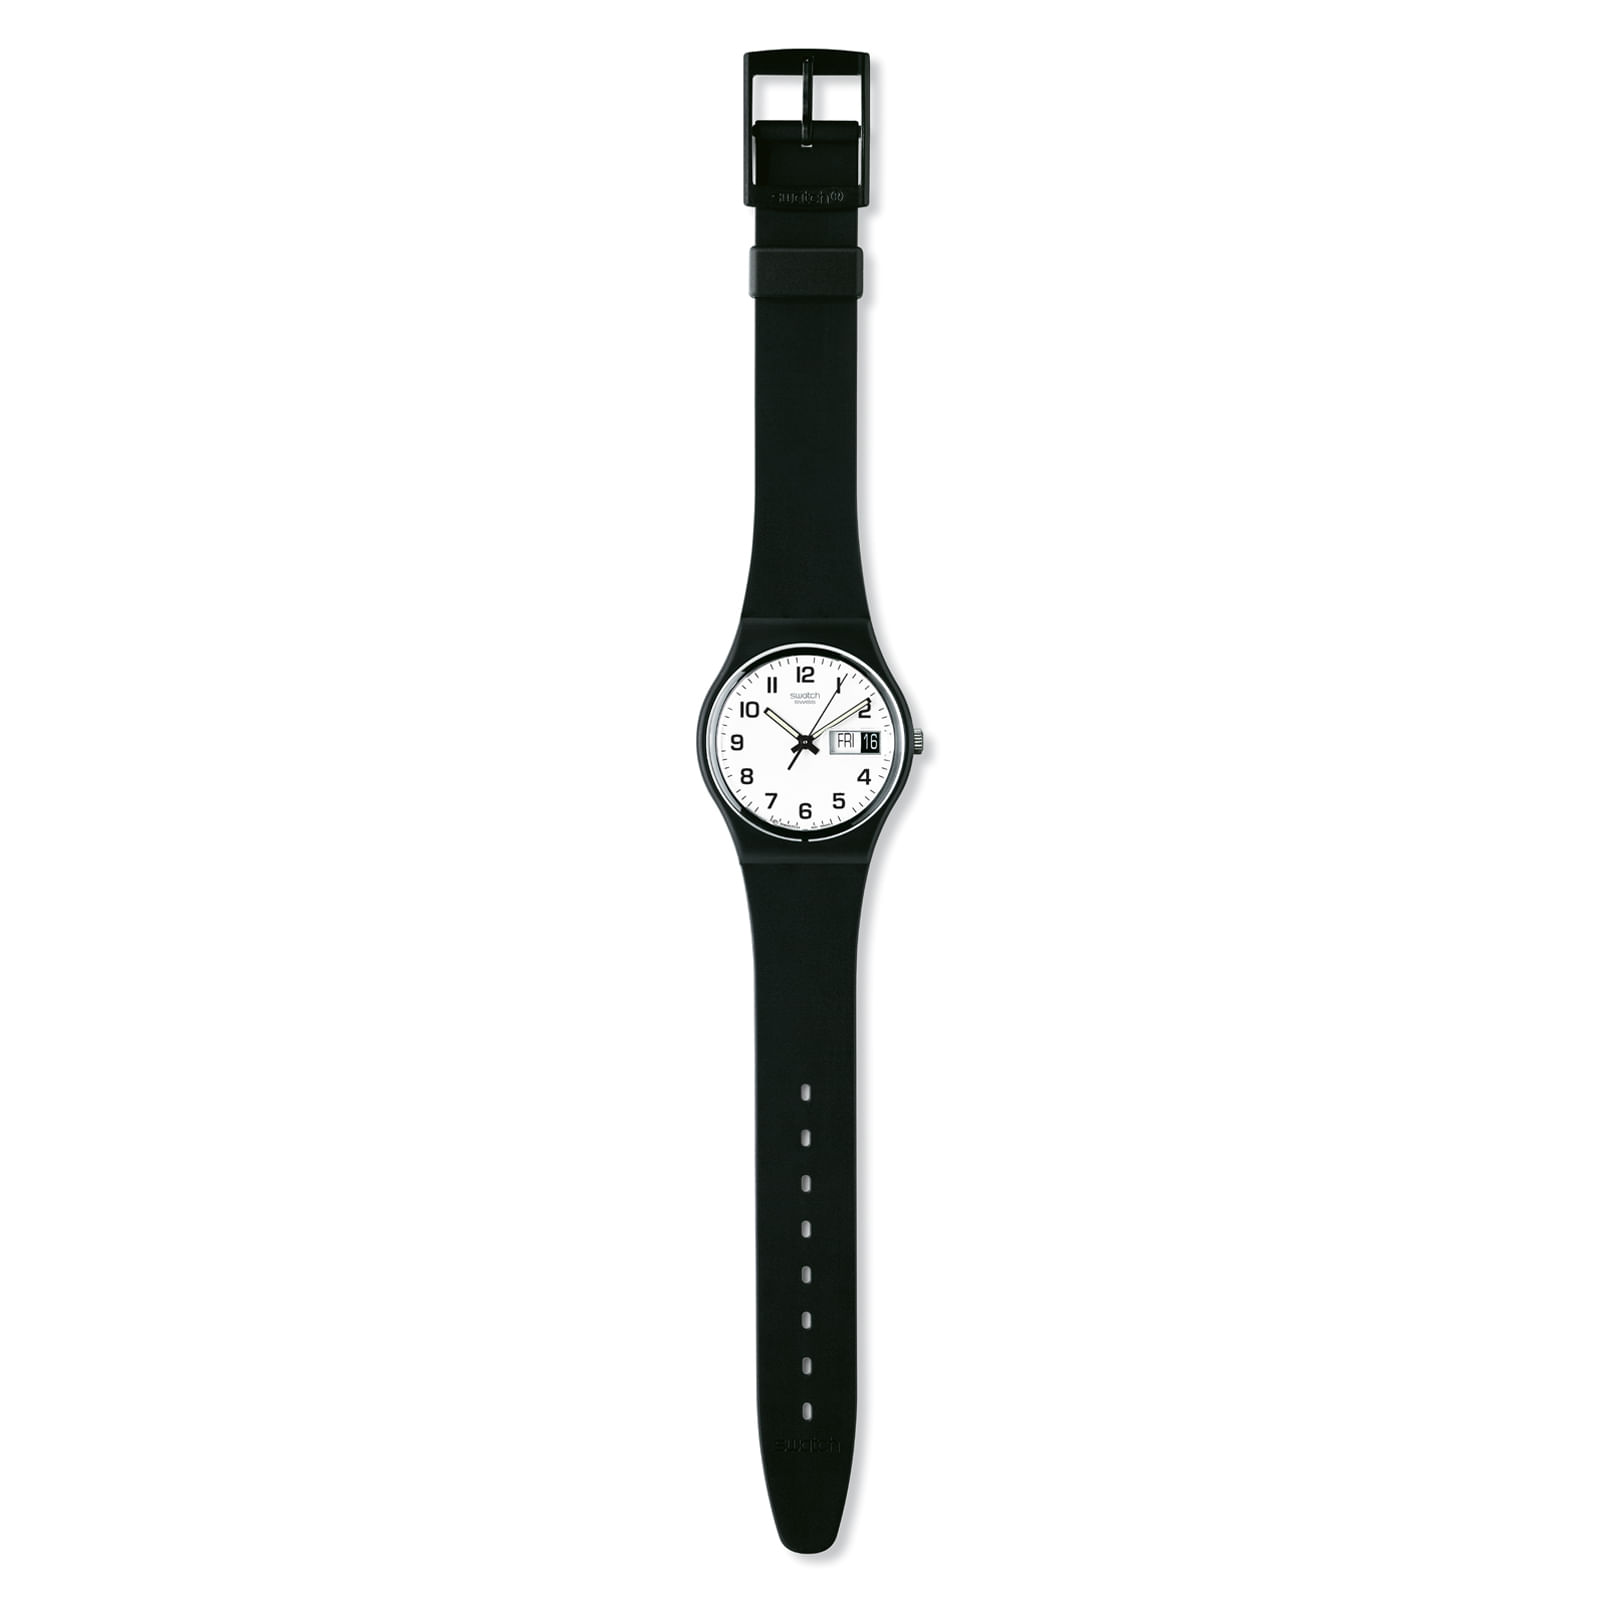 Reloj SWATCH ONCE AGAIN GB743 Negro